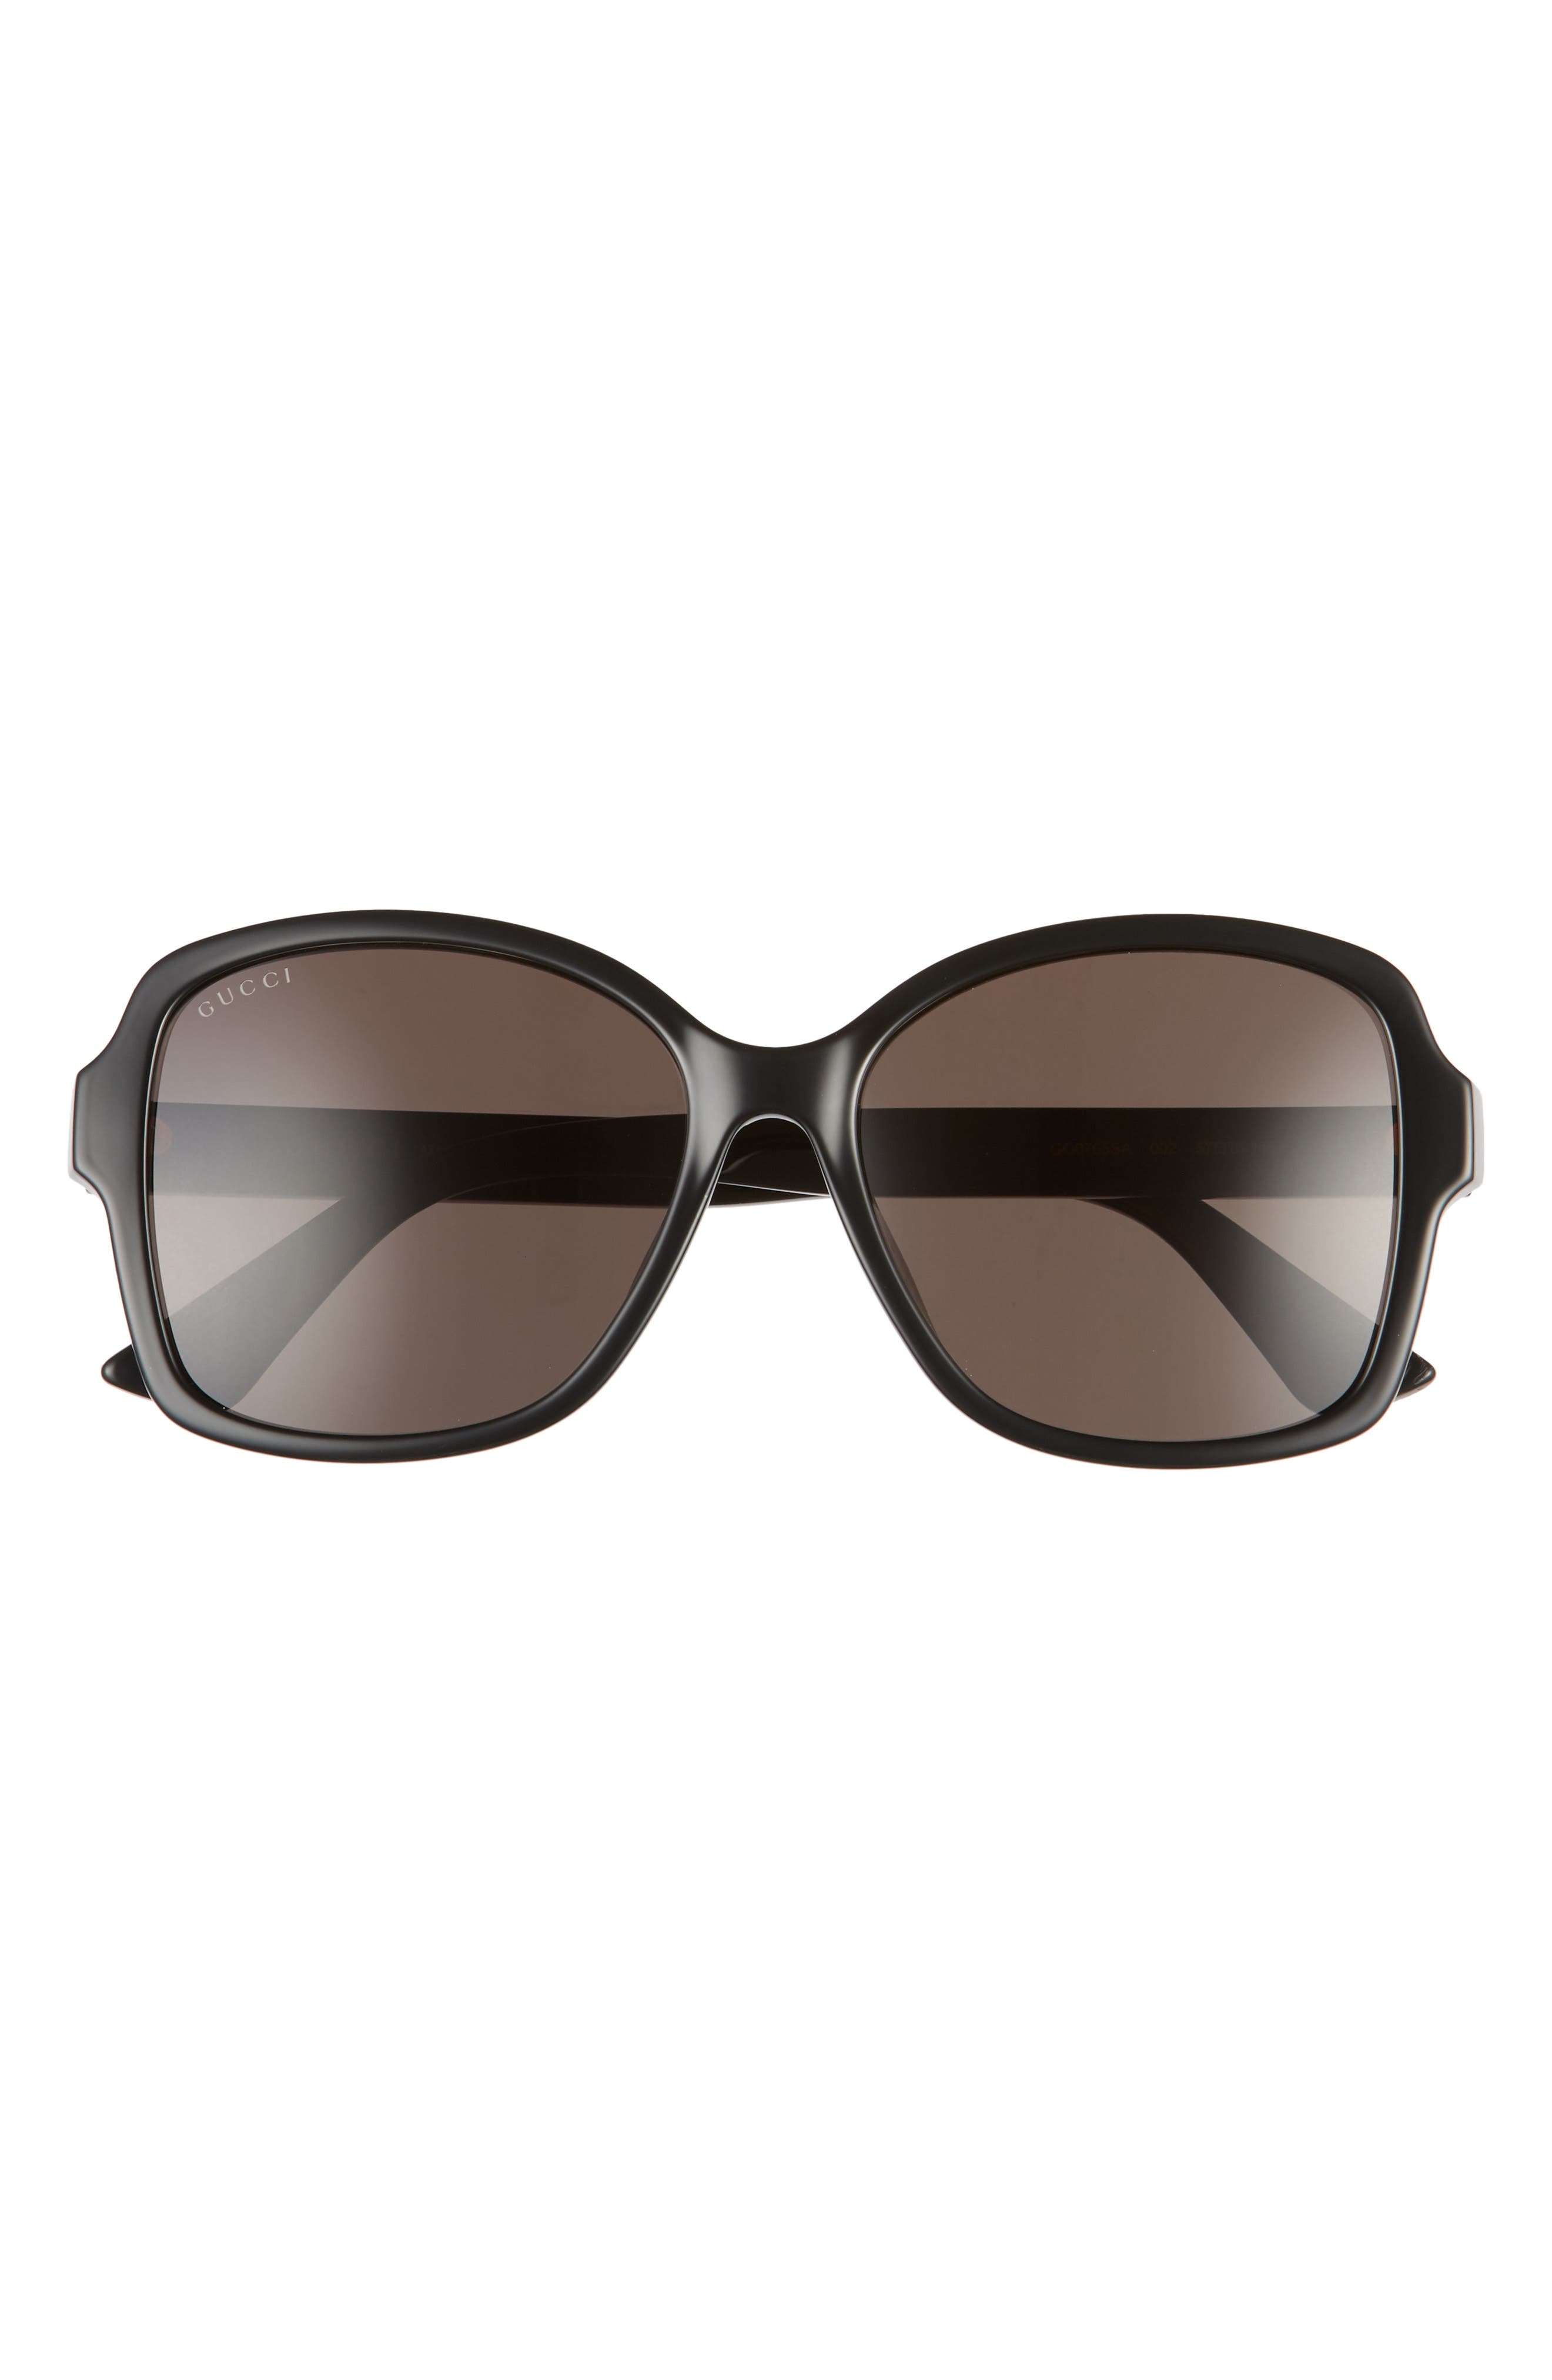 Gucci 57mm Rectangular Sunglasses in Black/Grey at Nordstrom